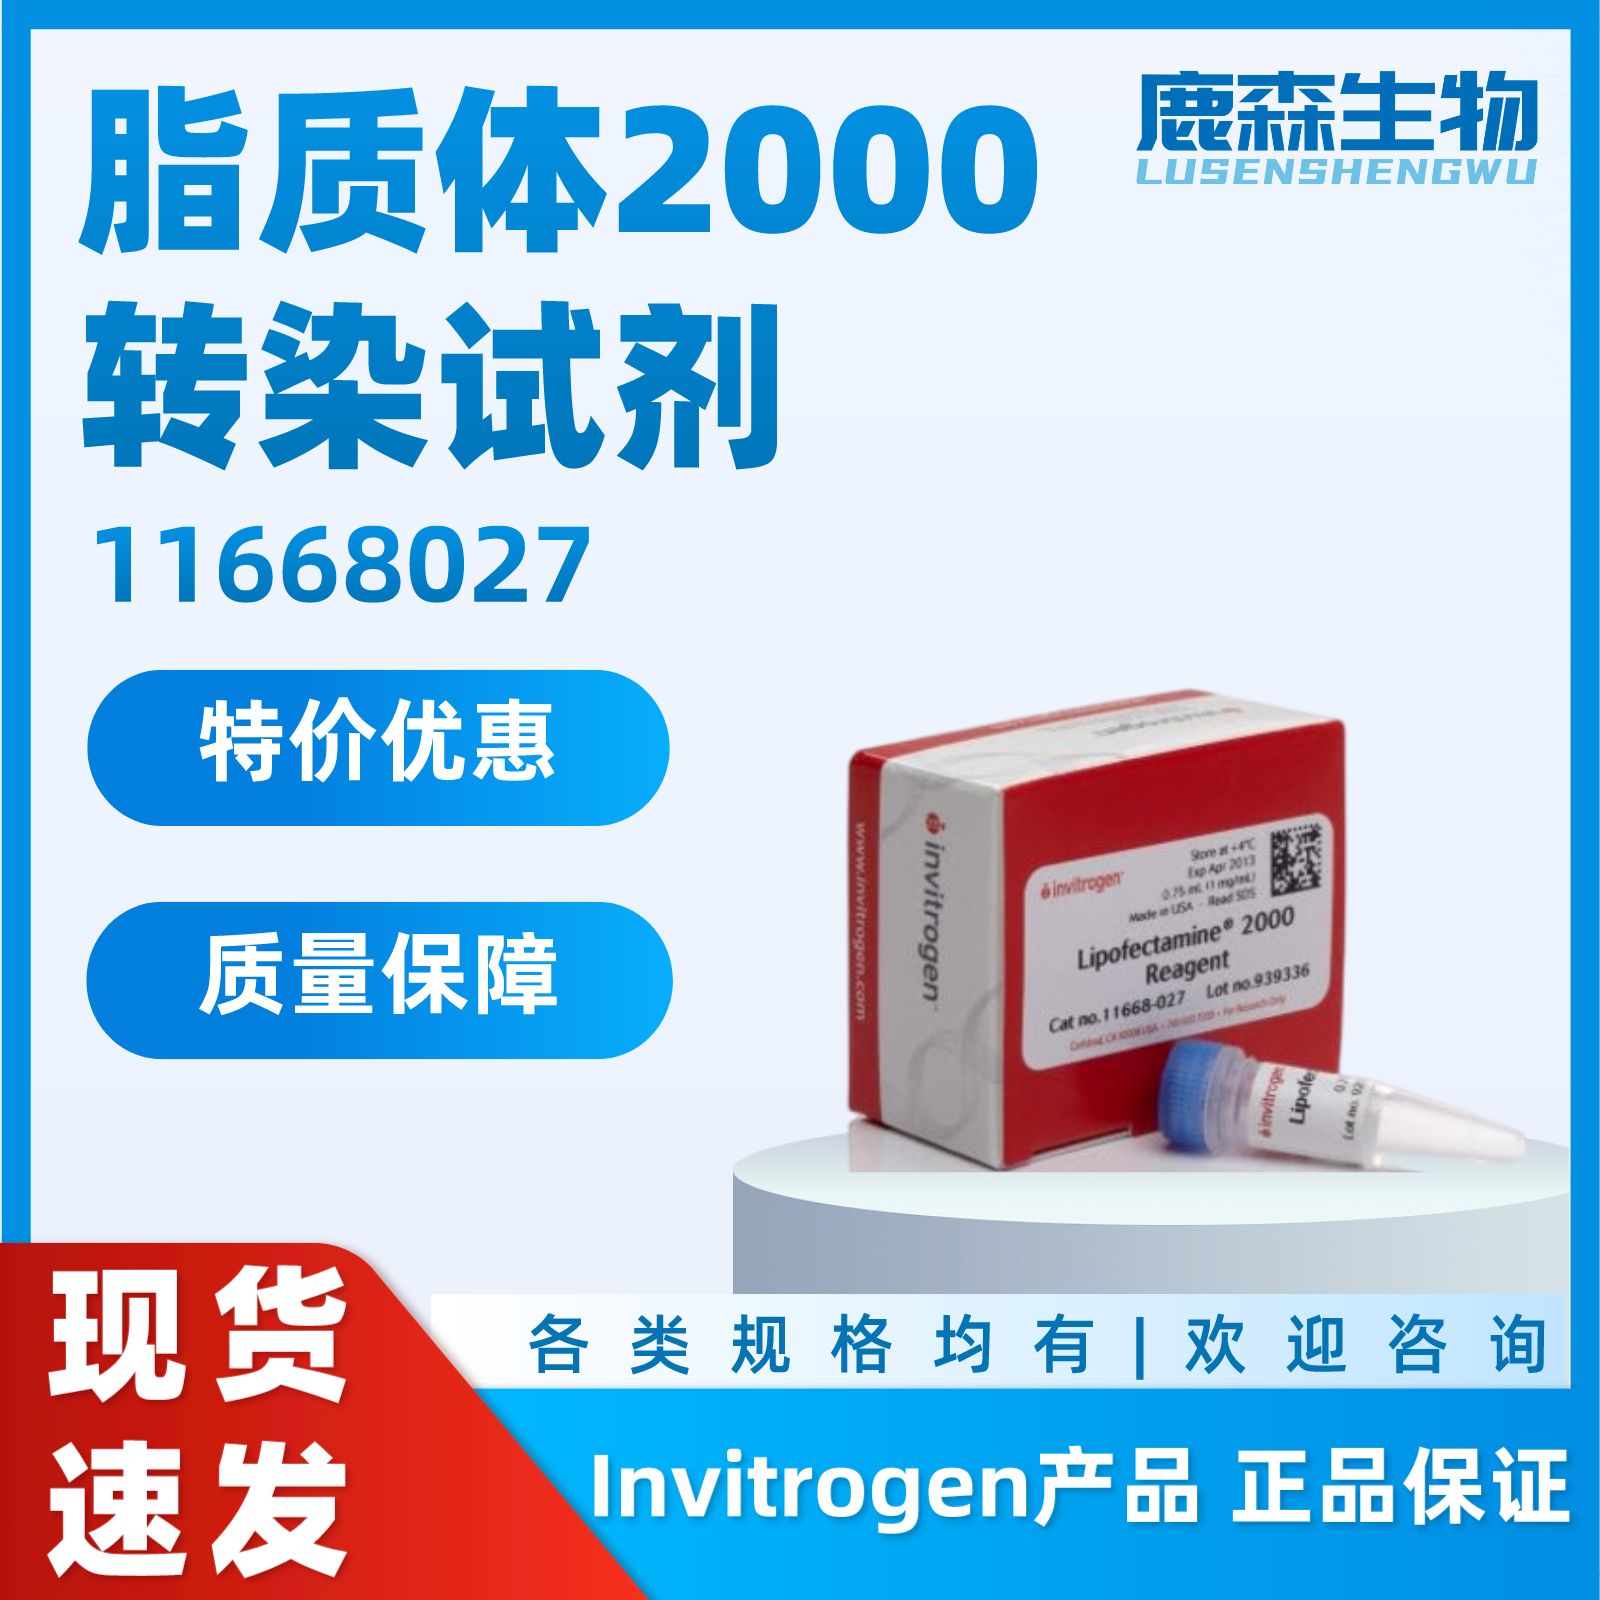 Invitrogen Lip2000转染试剂，货号11668027